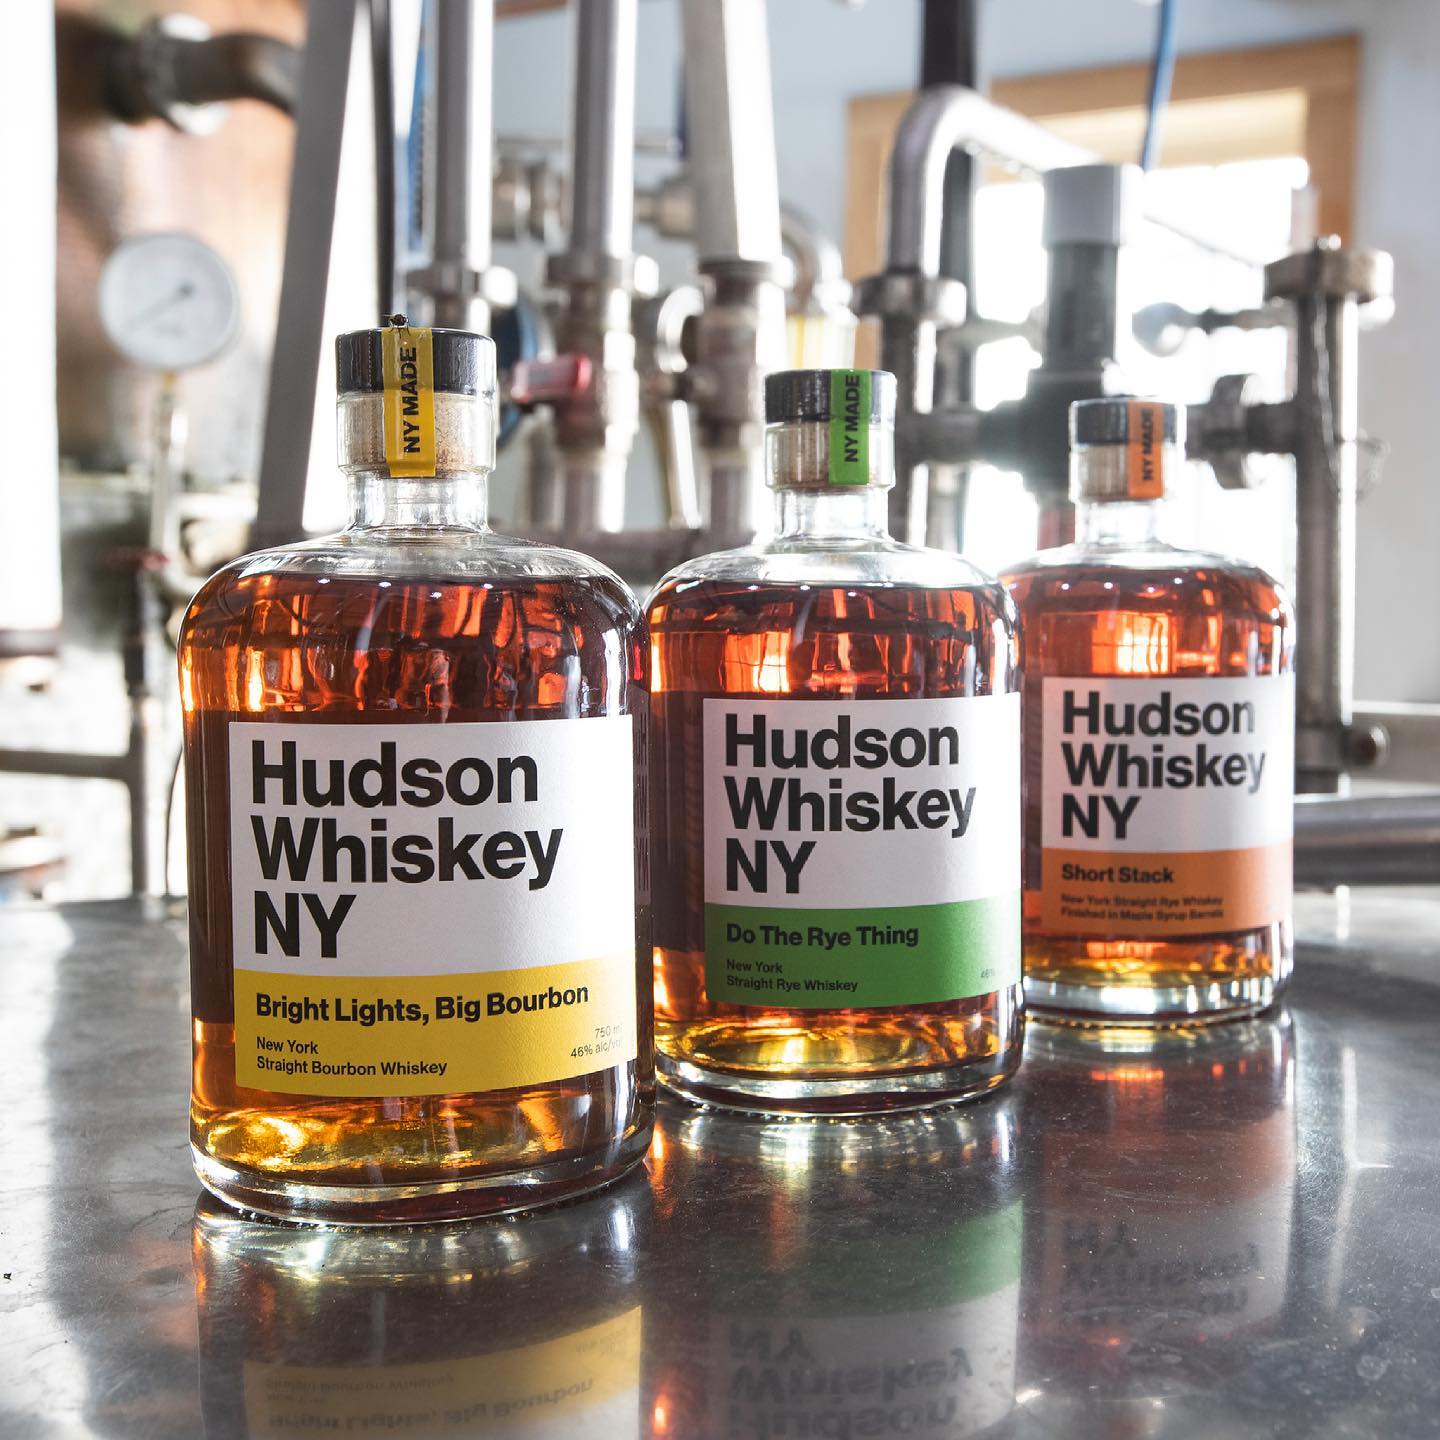 Hudson Whiskey NY